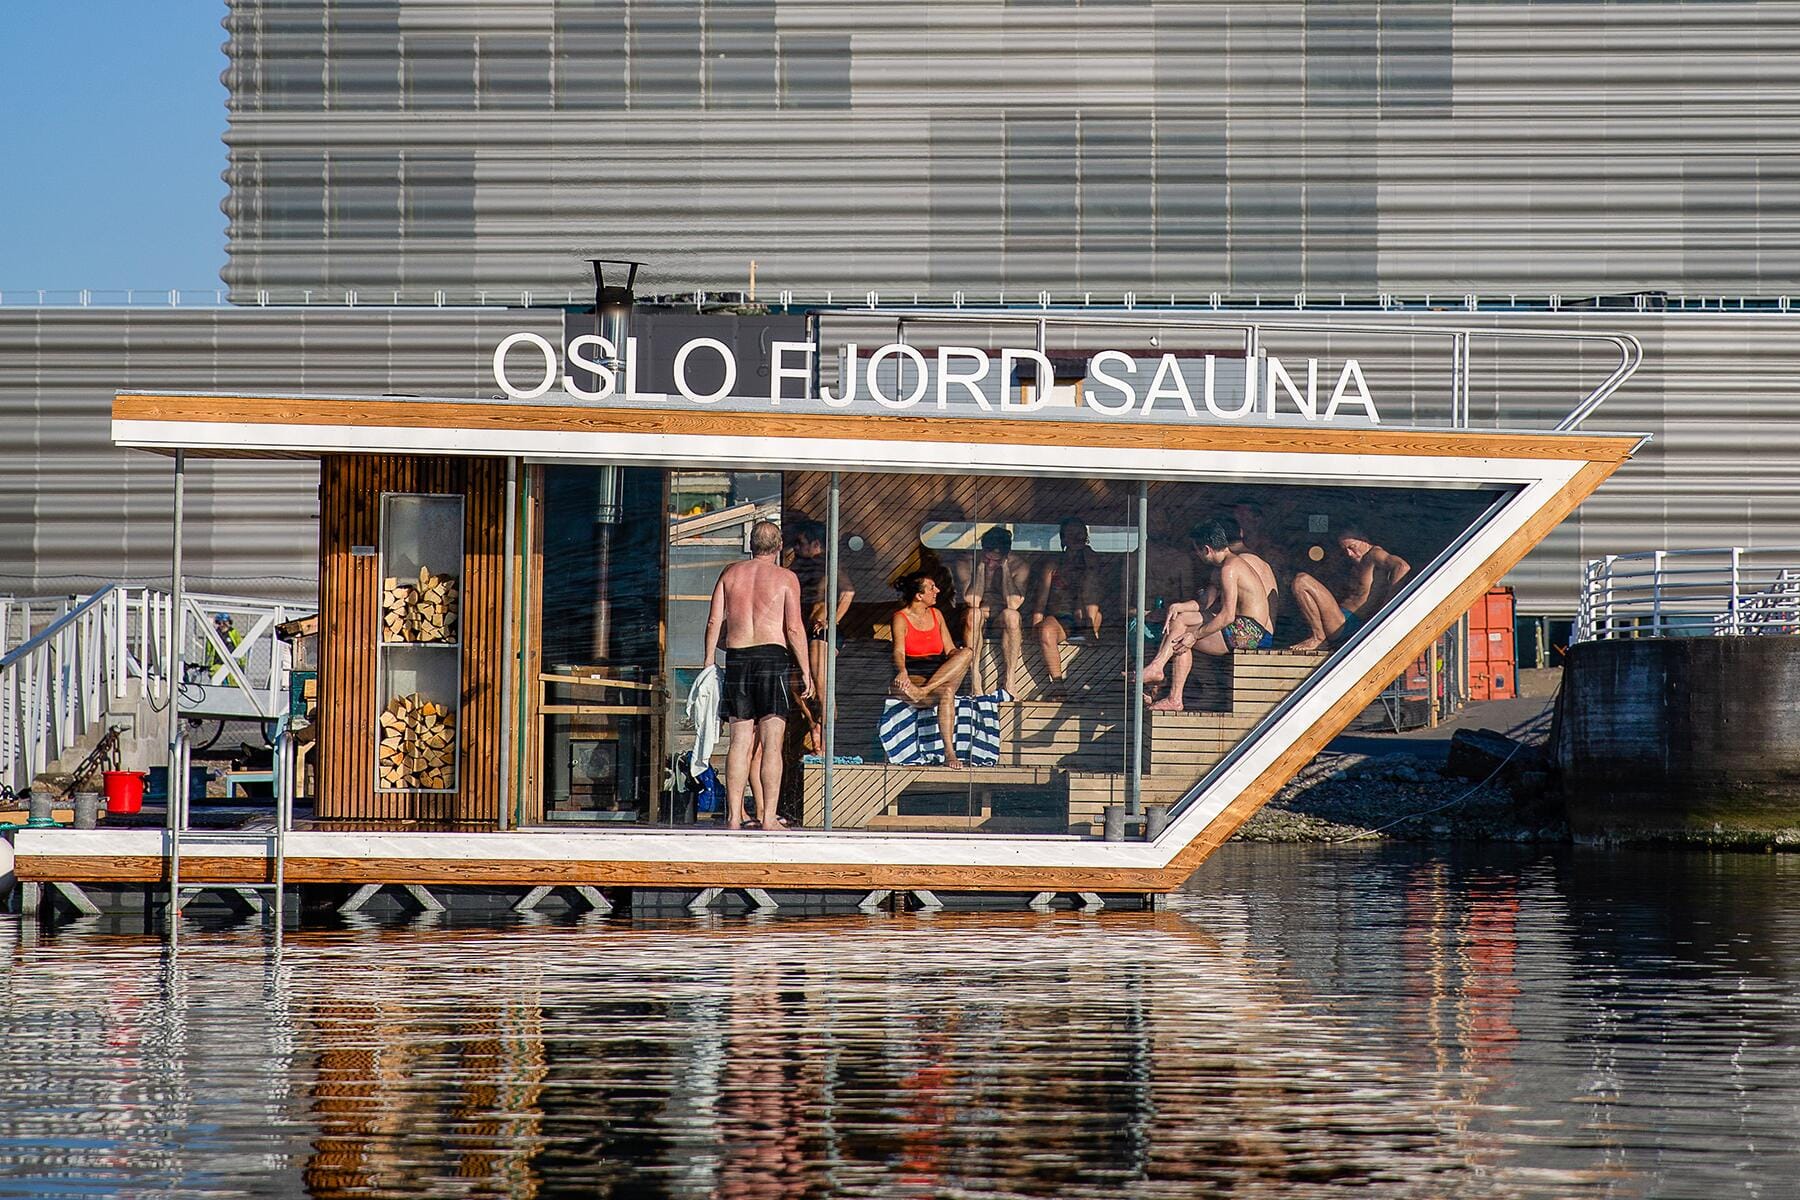 Oslo fjord sauna